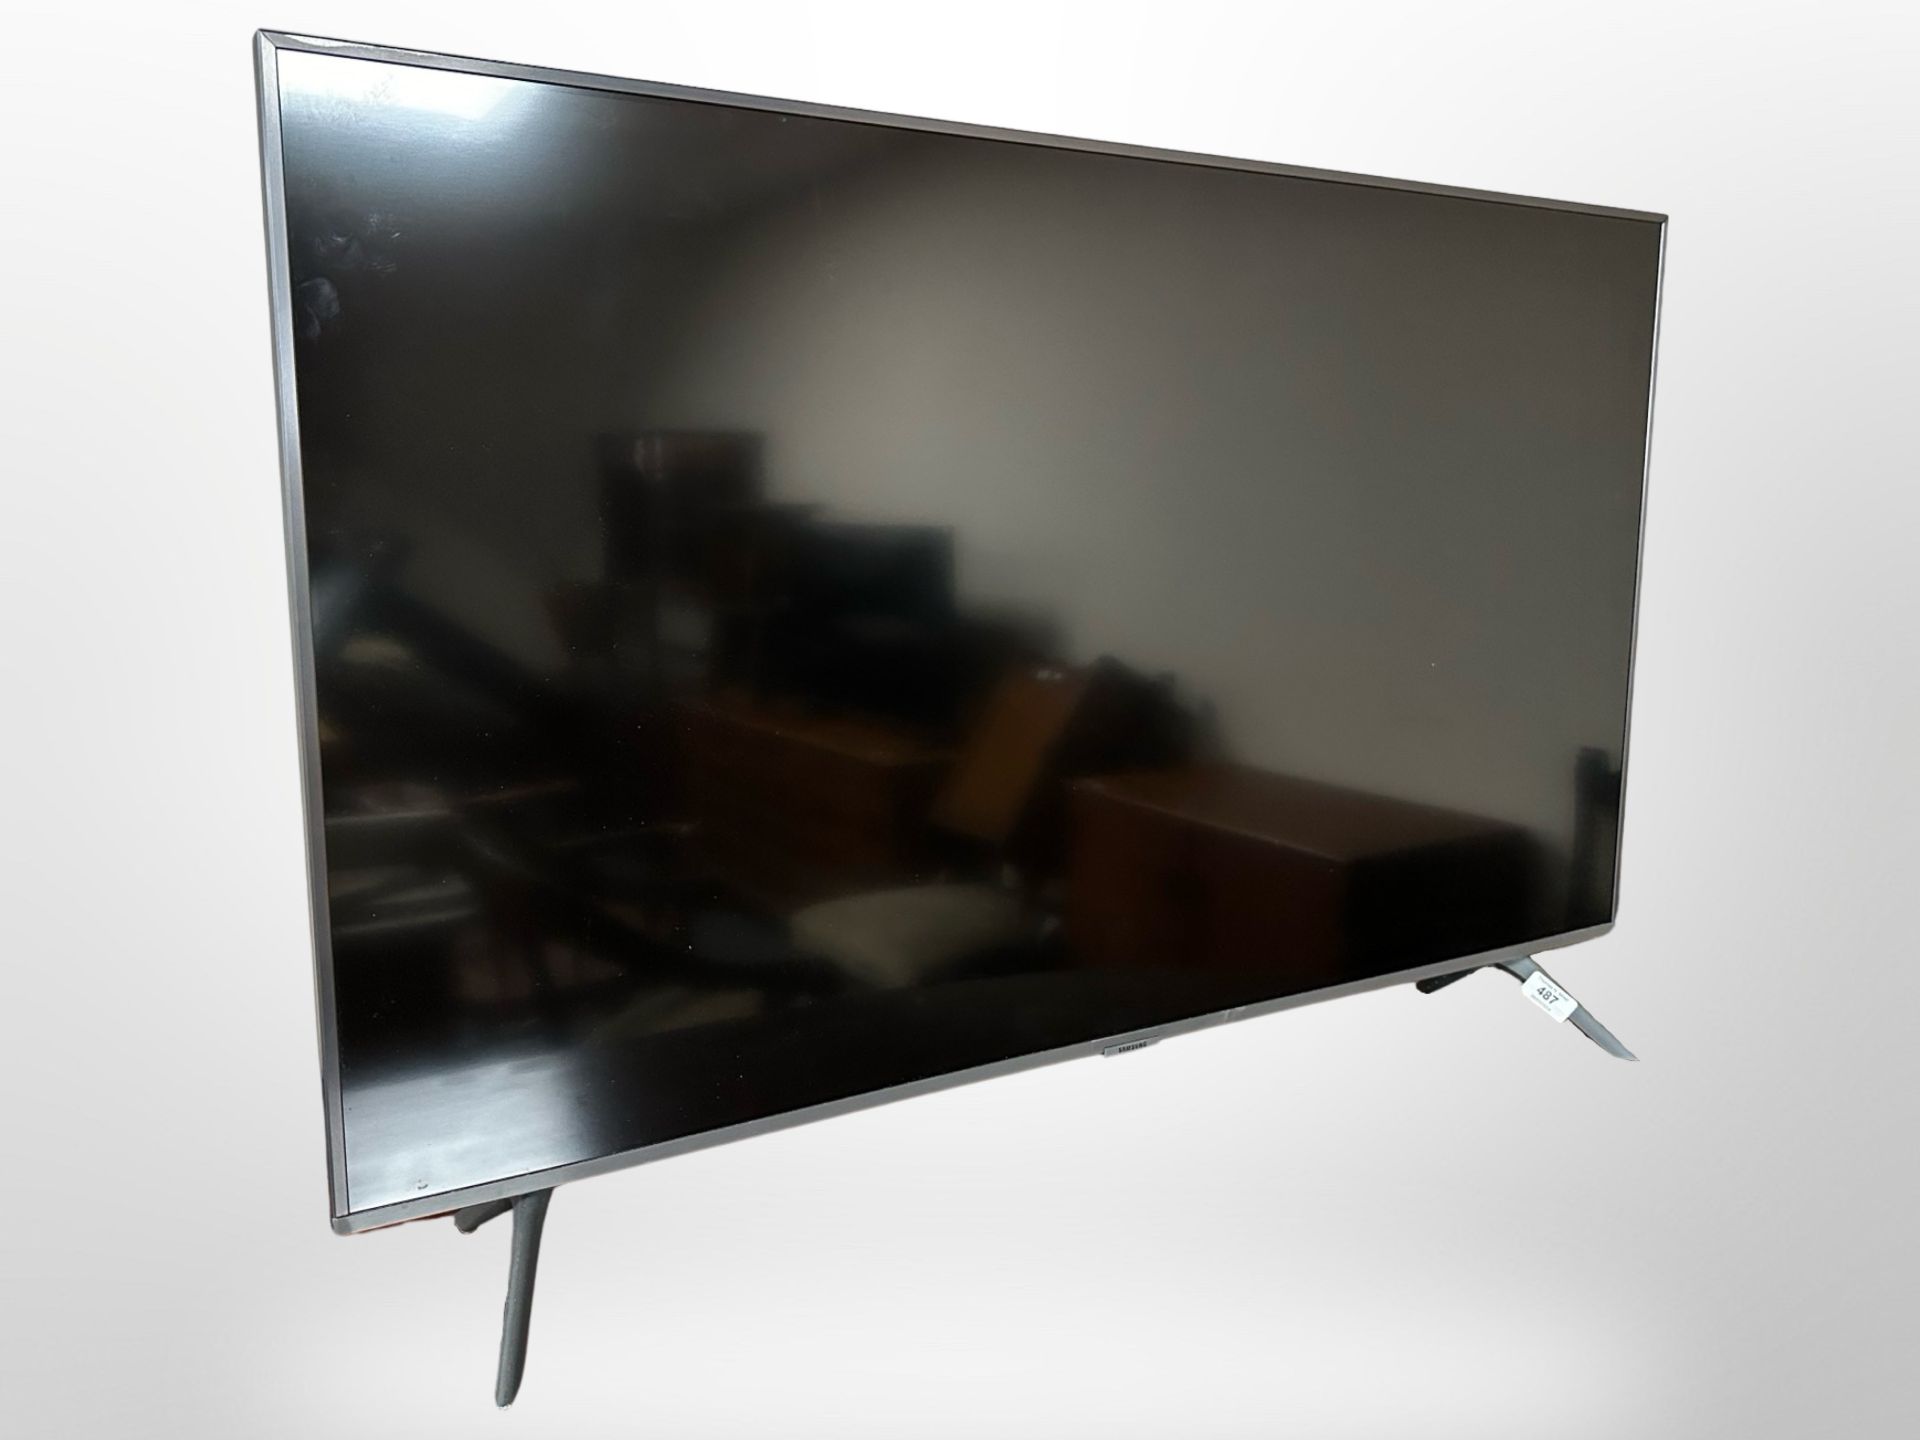 Samsung 43 inch LCD TV (no lead or remote)